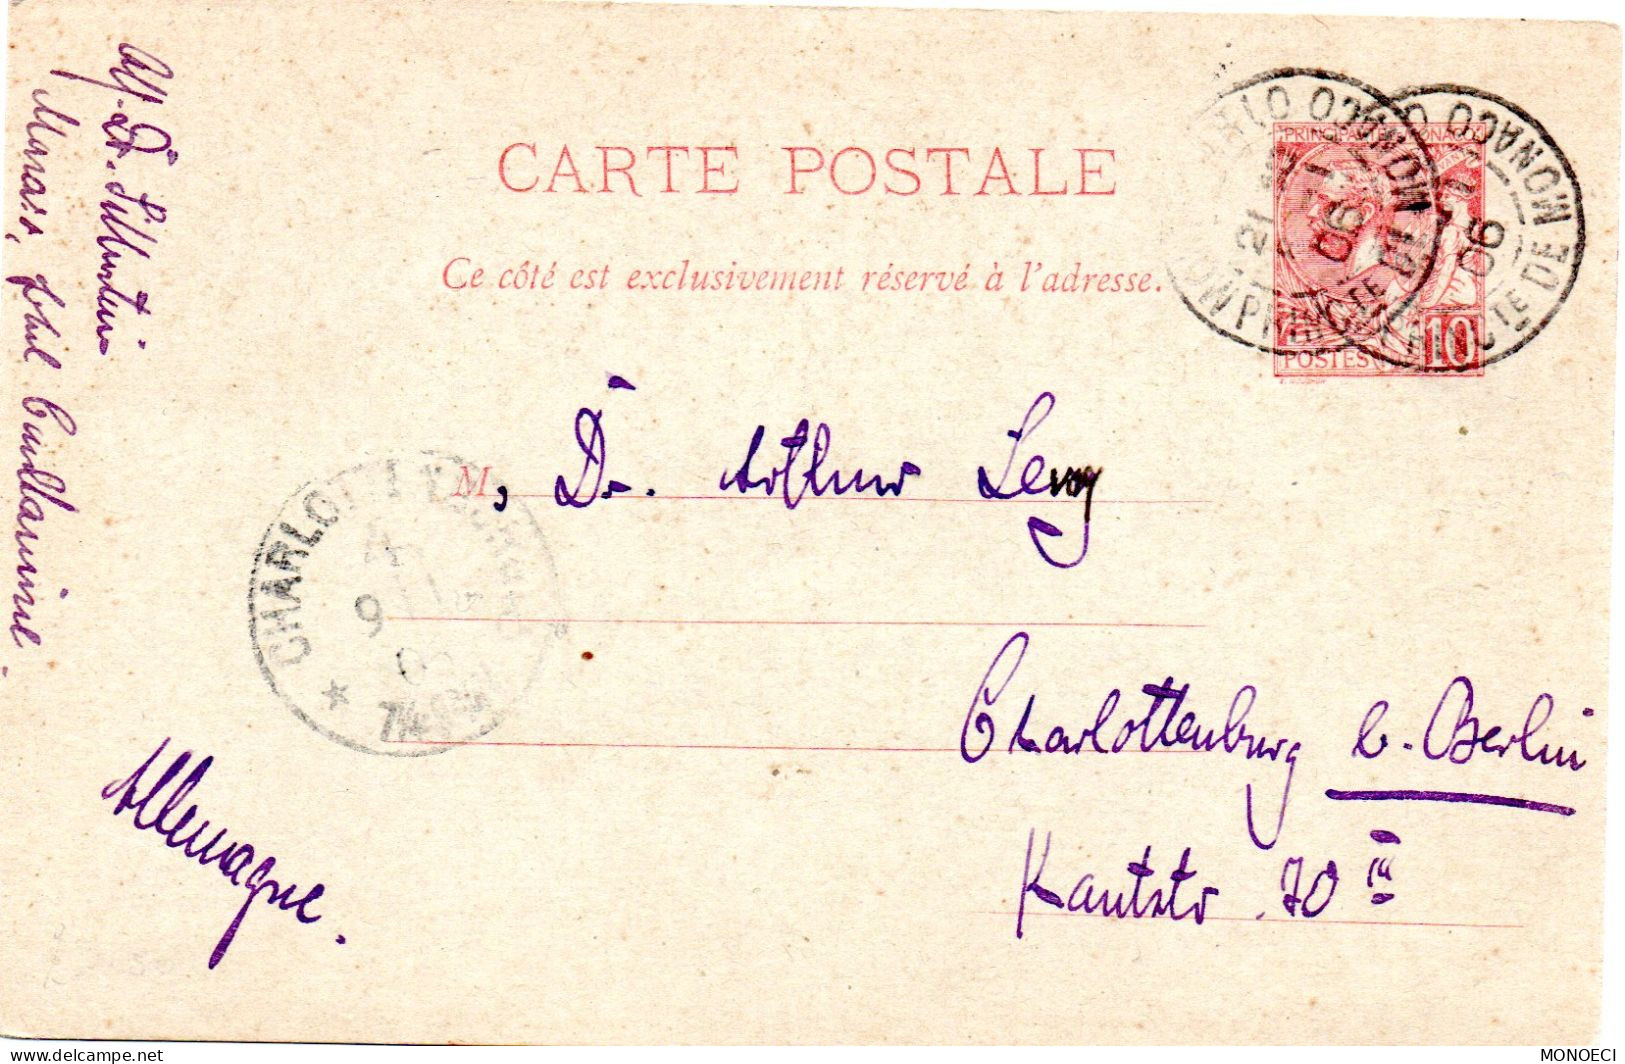 MONACO -- MONTE CARLO -- Entier Postal -- Carte Postale -- Prince Albert 1er -- 10 C. Rouge Sur Vert (1901) - Postal Stationery